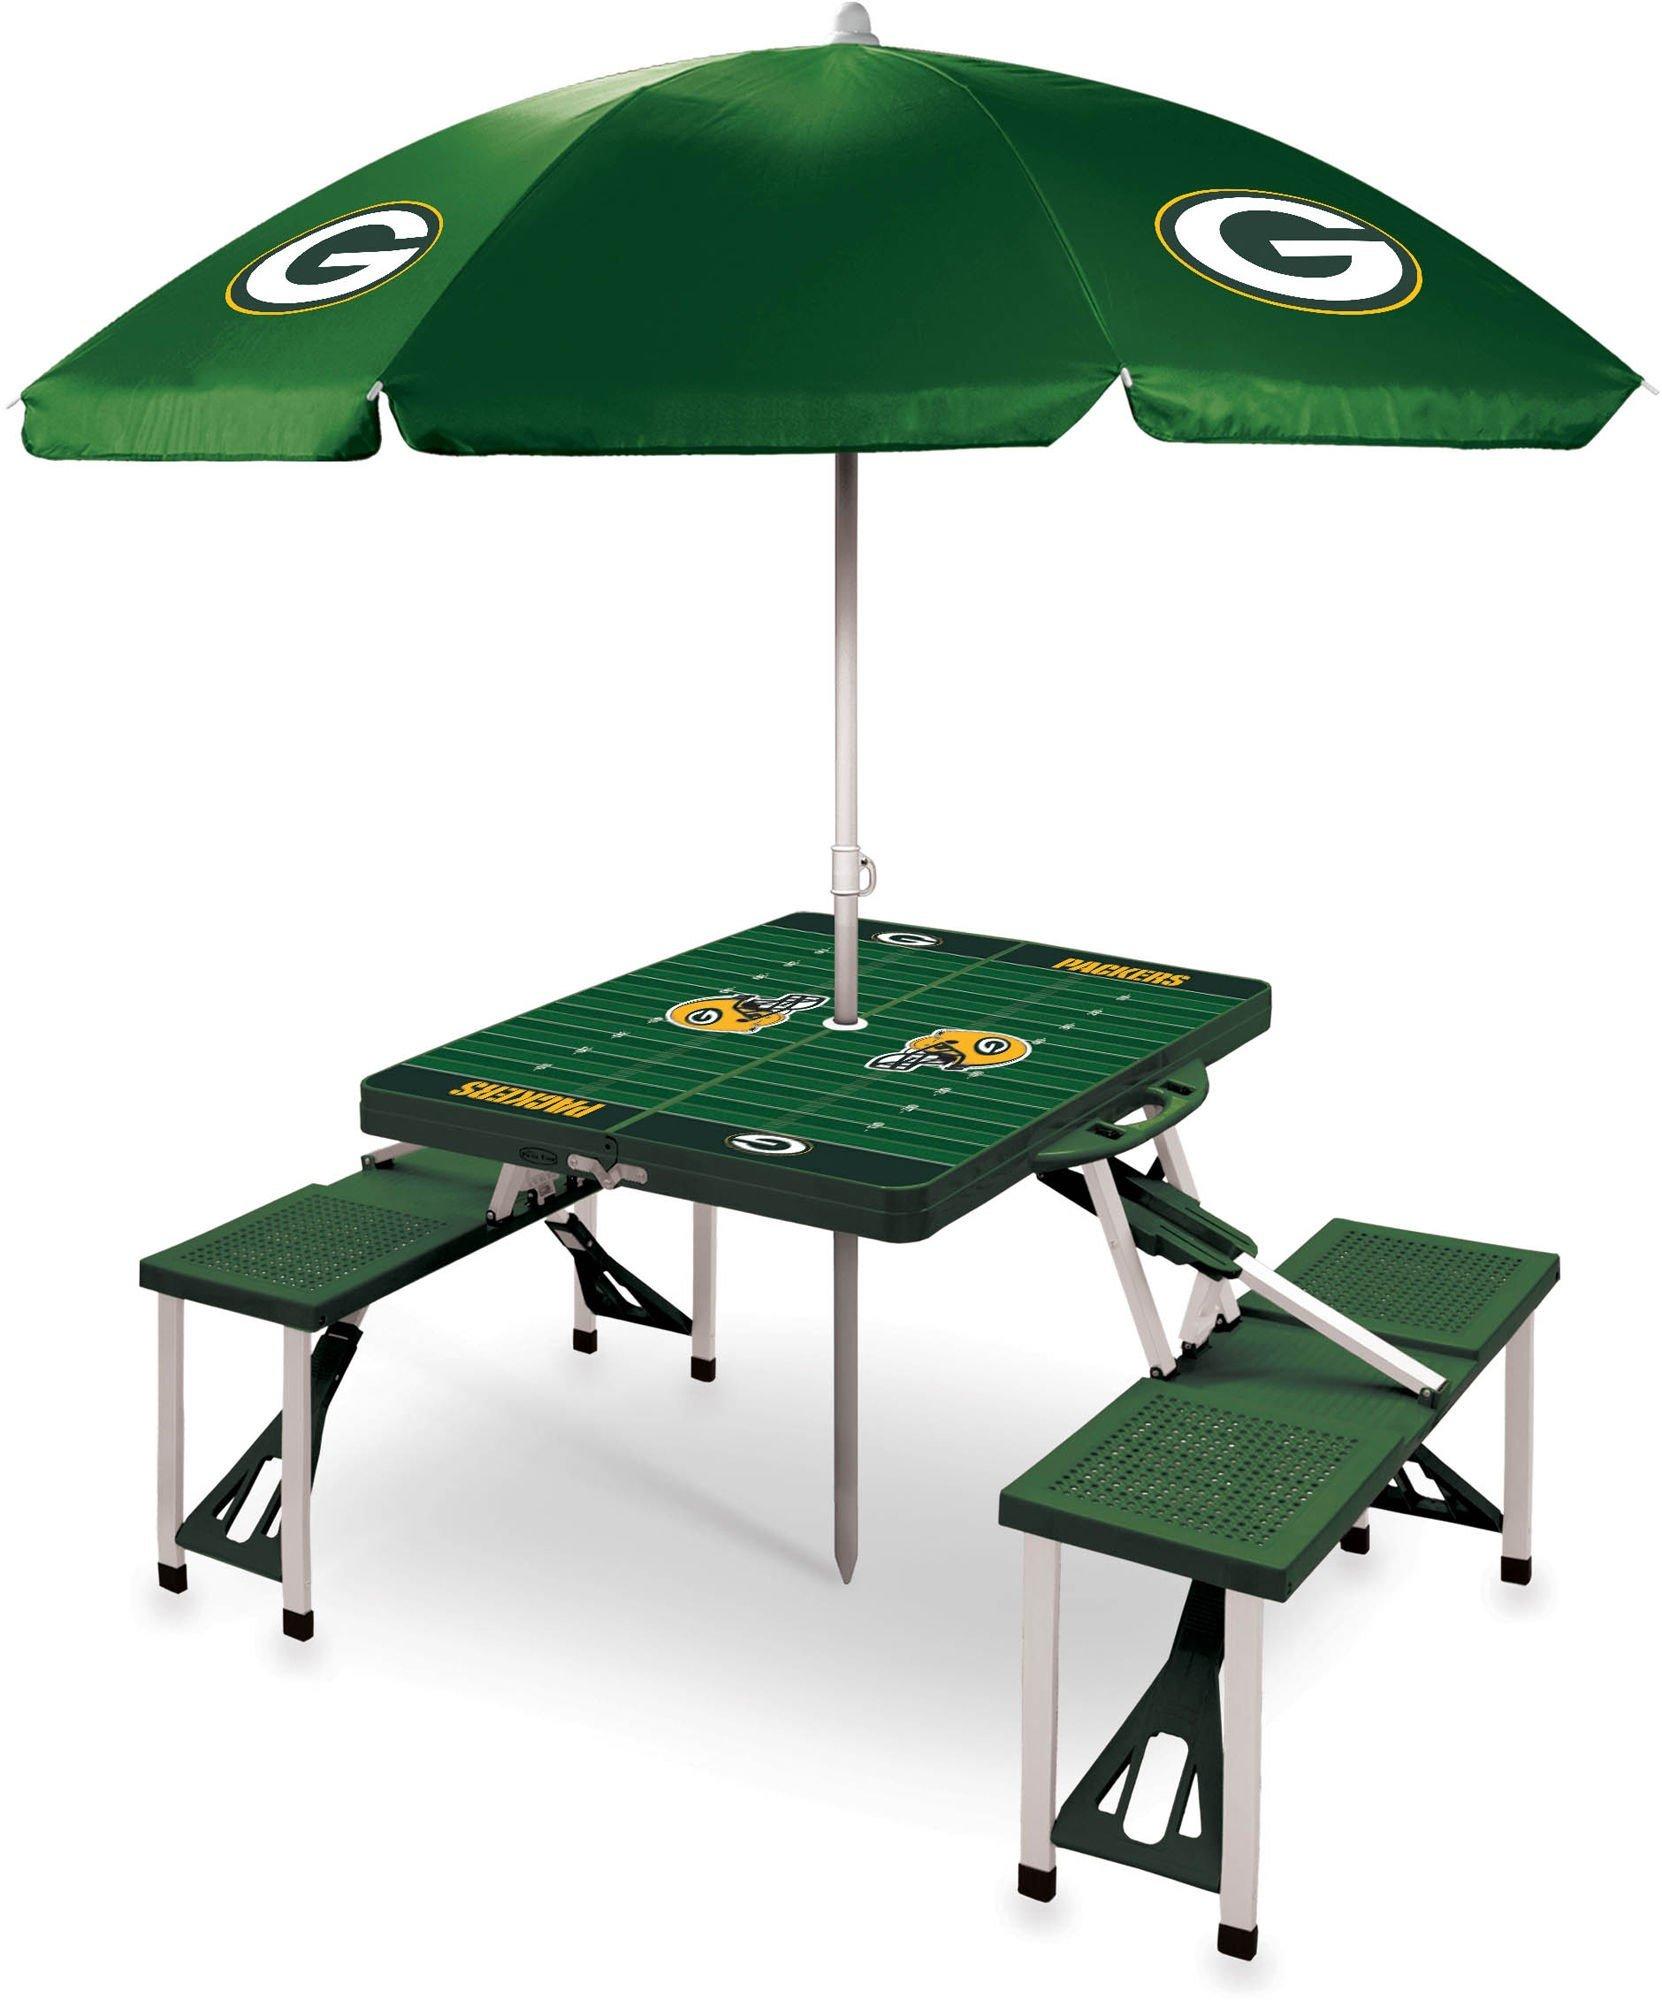 Green Bay Packers Picnic Table and Umbrella